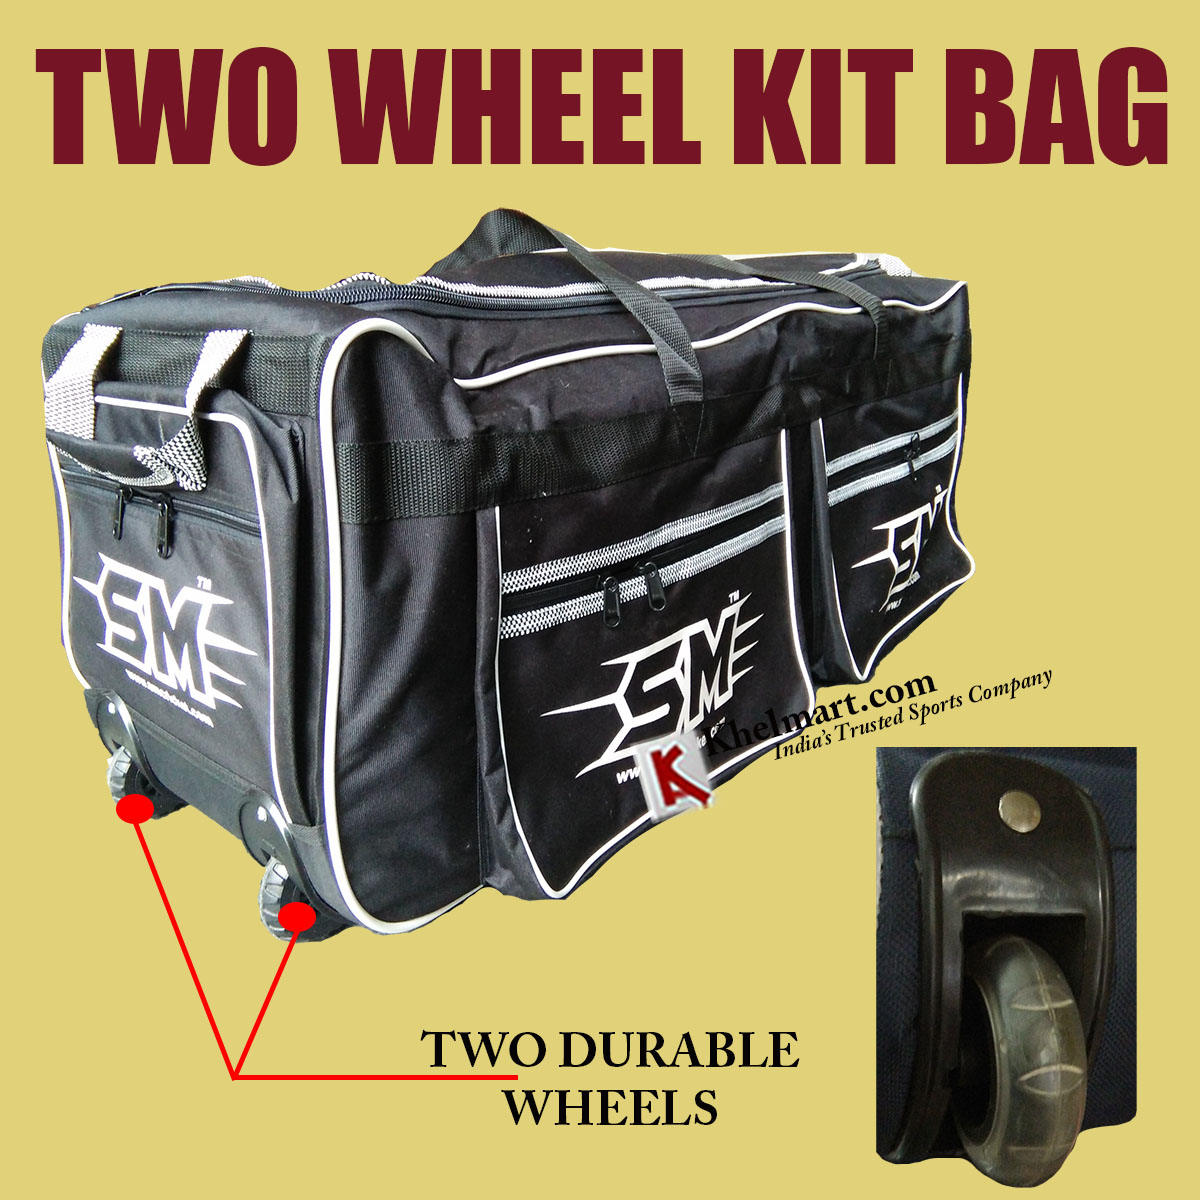 SG ASHES X2 Kit Bag - Tornado Cricket Store